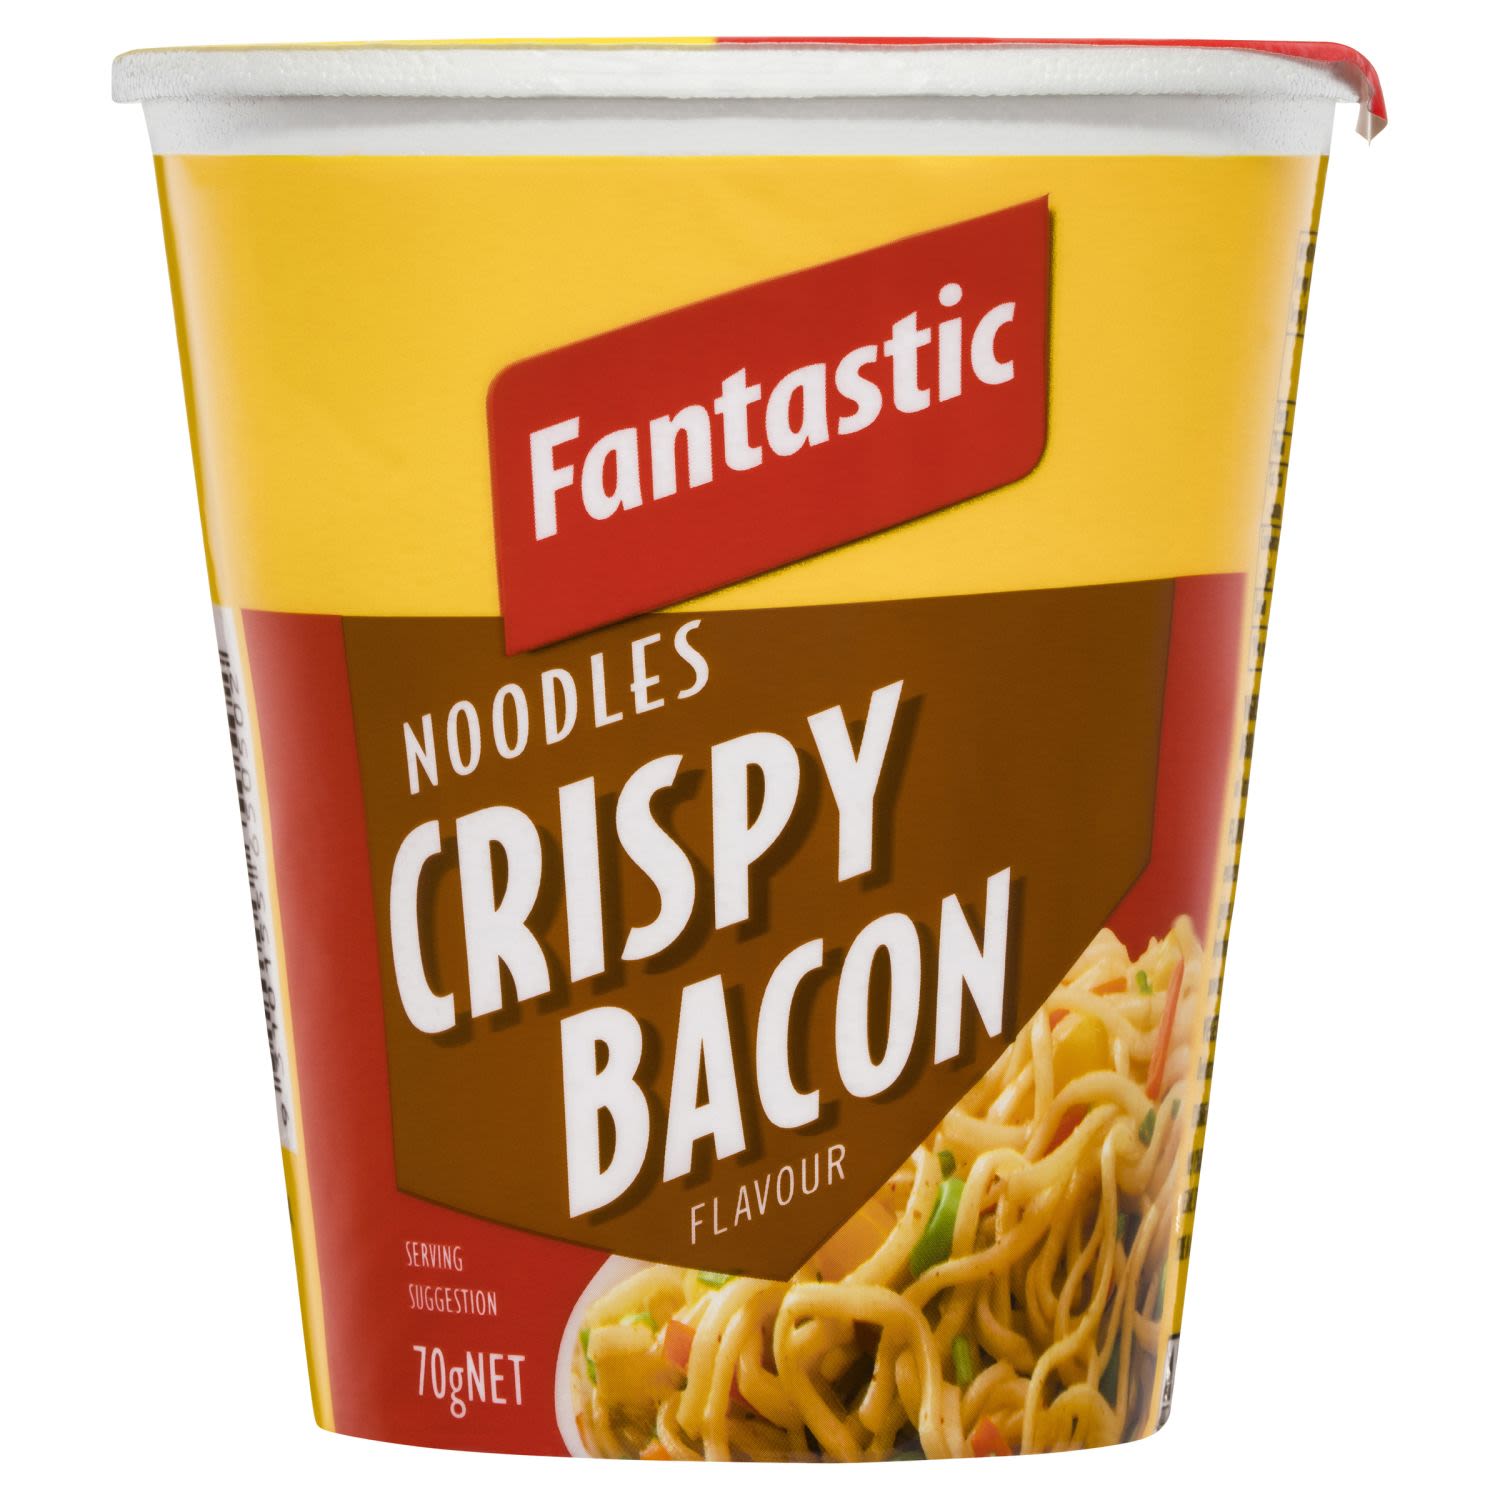 Fantastic Cup Noodles Crispy Bacon, 70 Gram